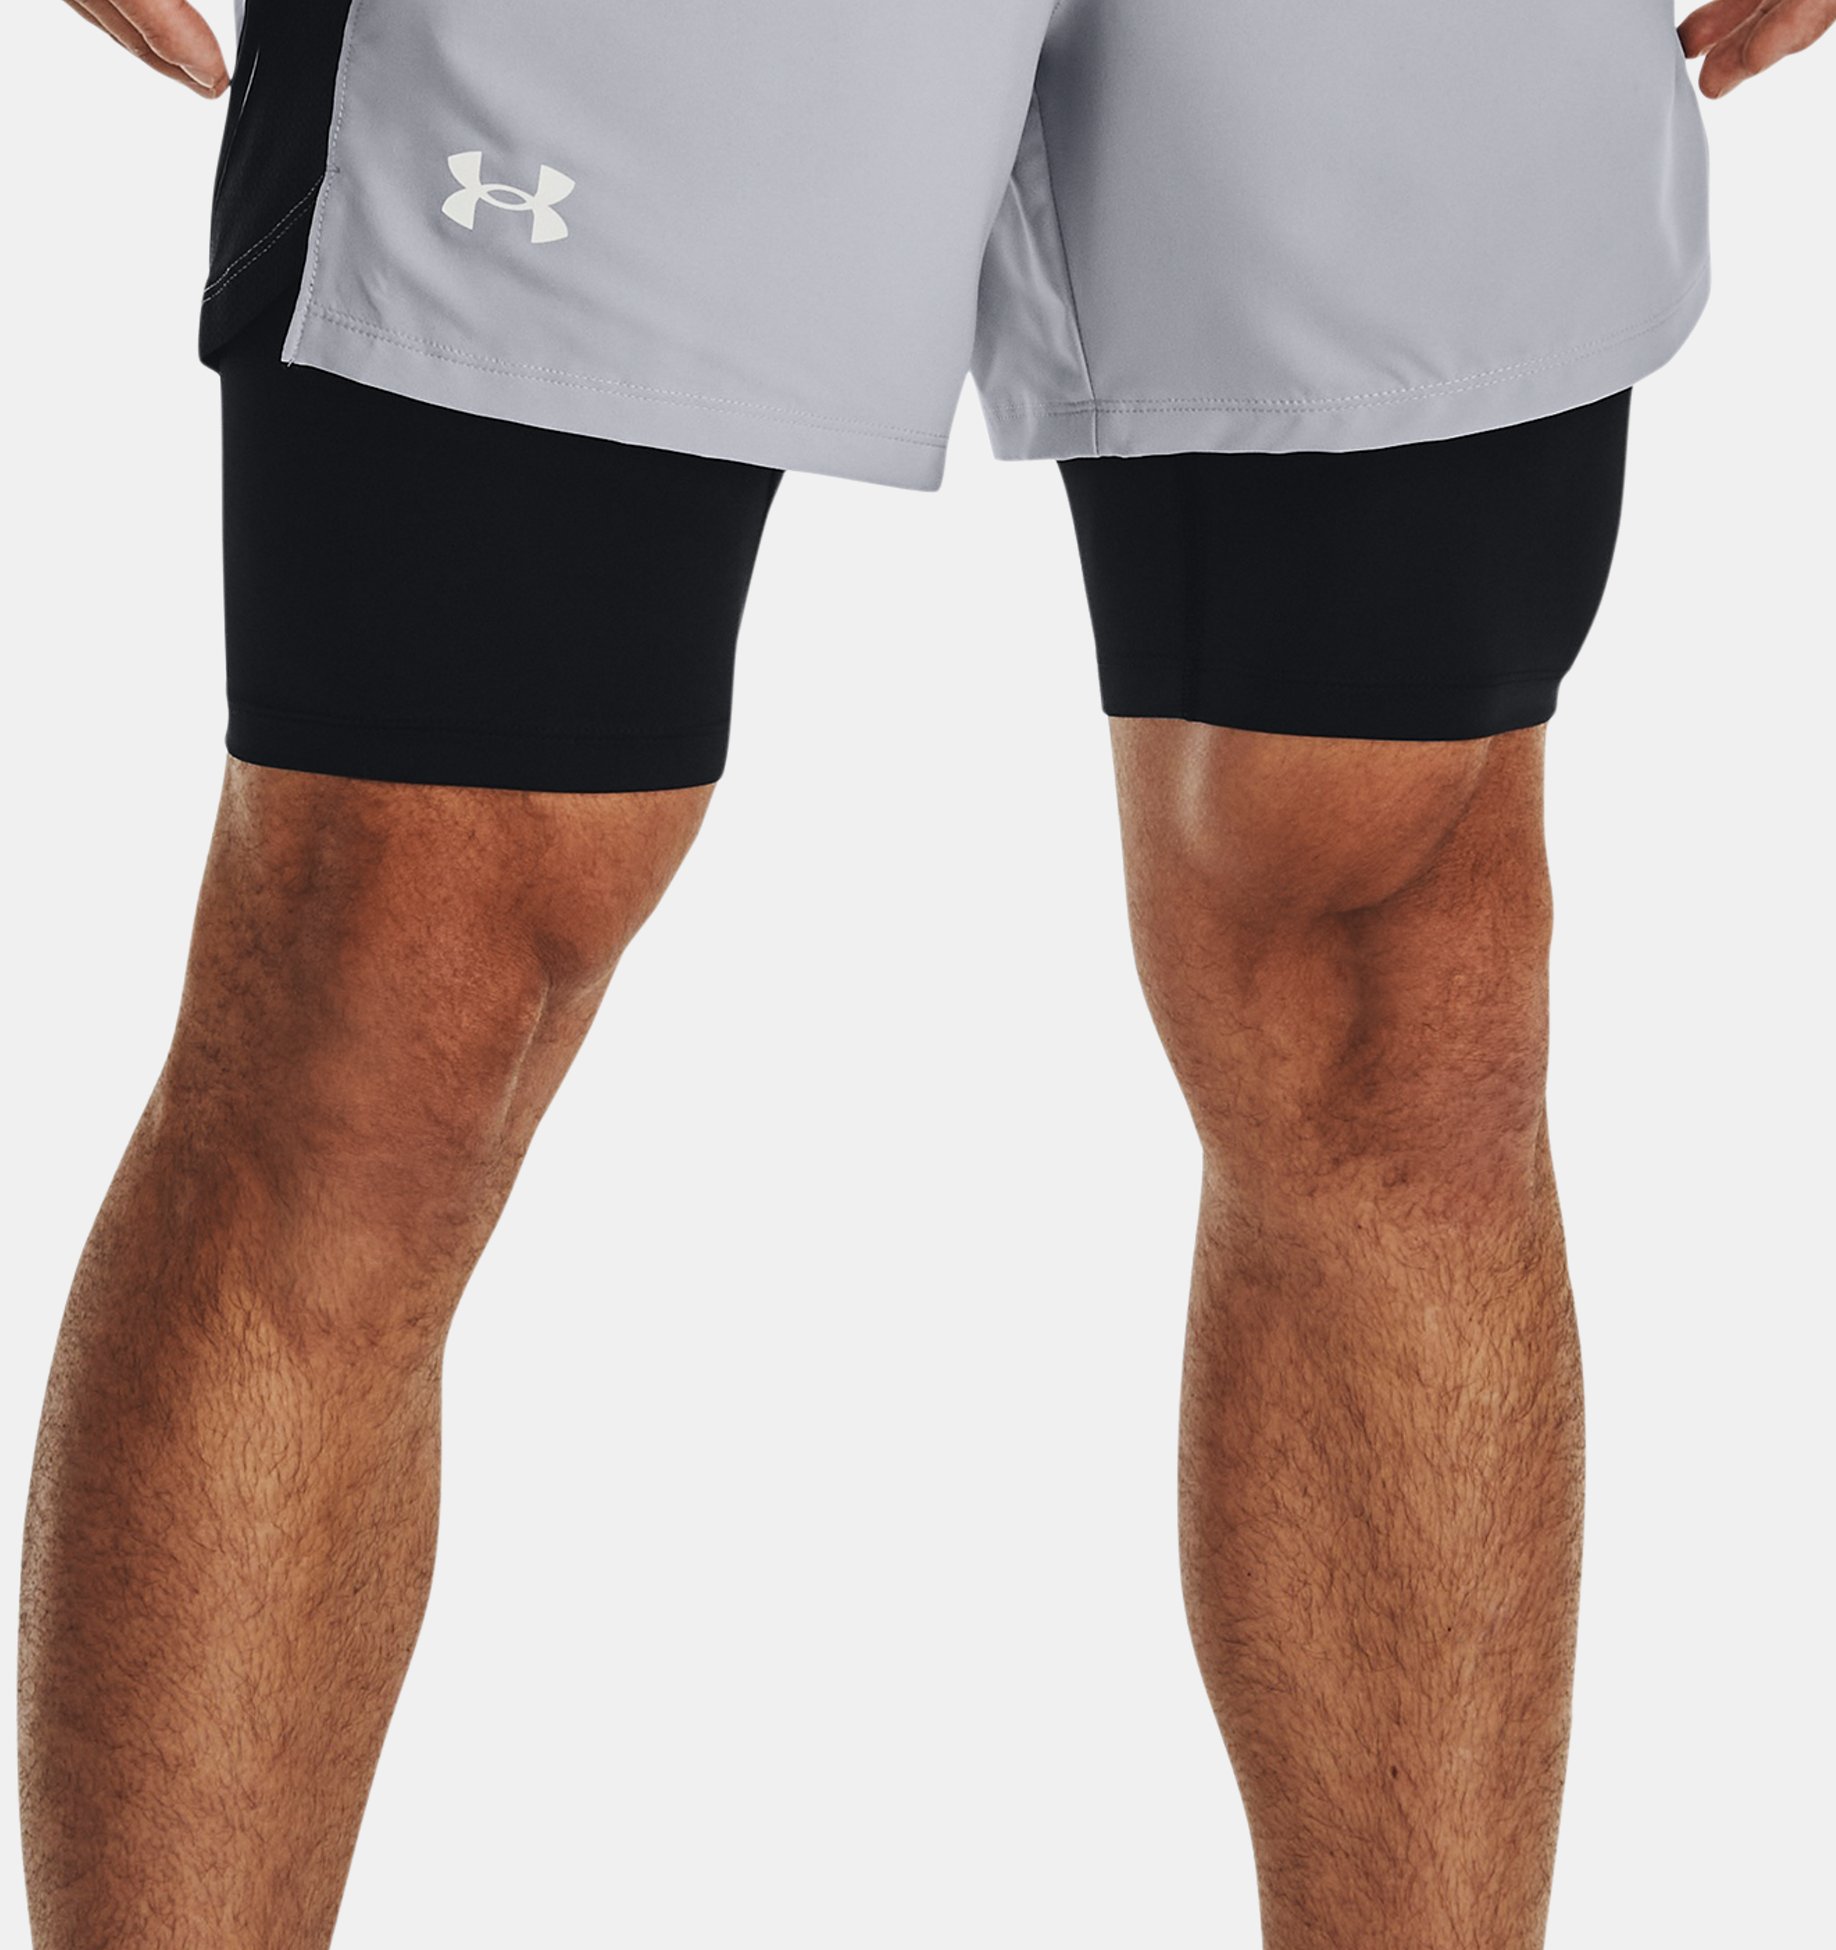 NEW Under Armour Men’s Speedpocket Running Shorts With Mesh Liner - Size 2XL